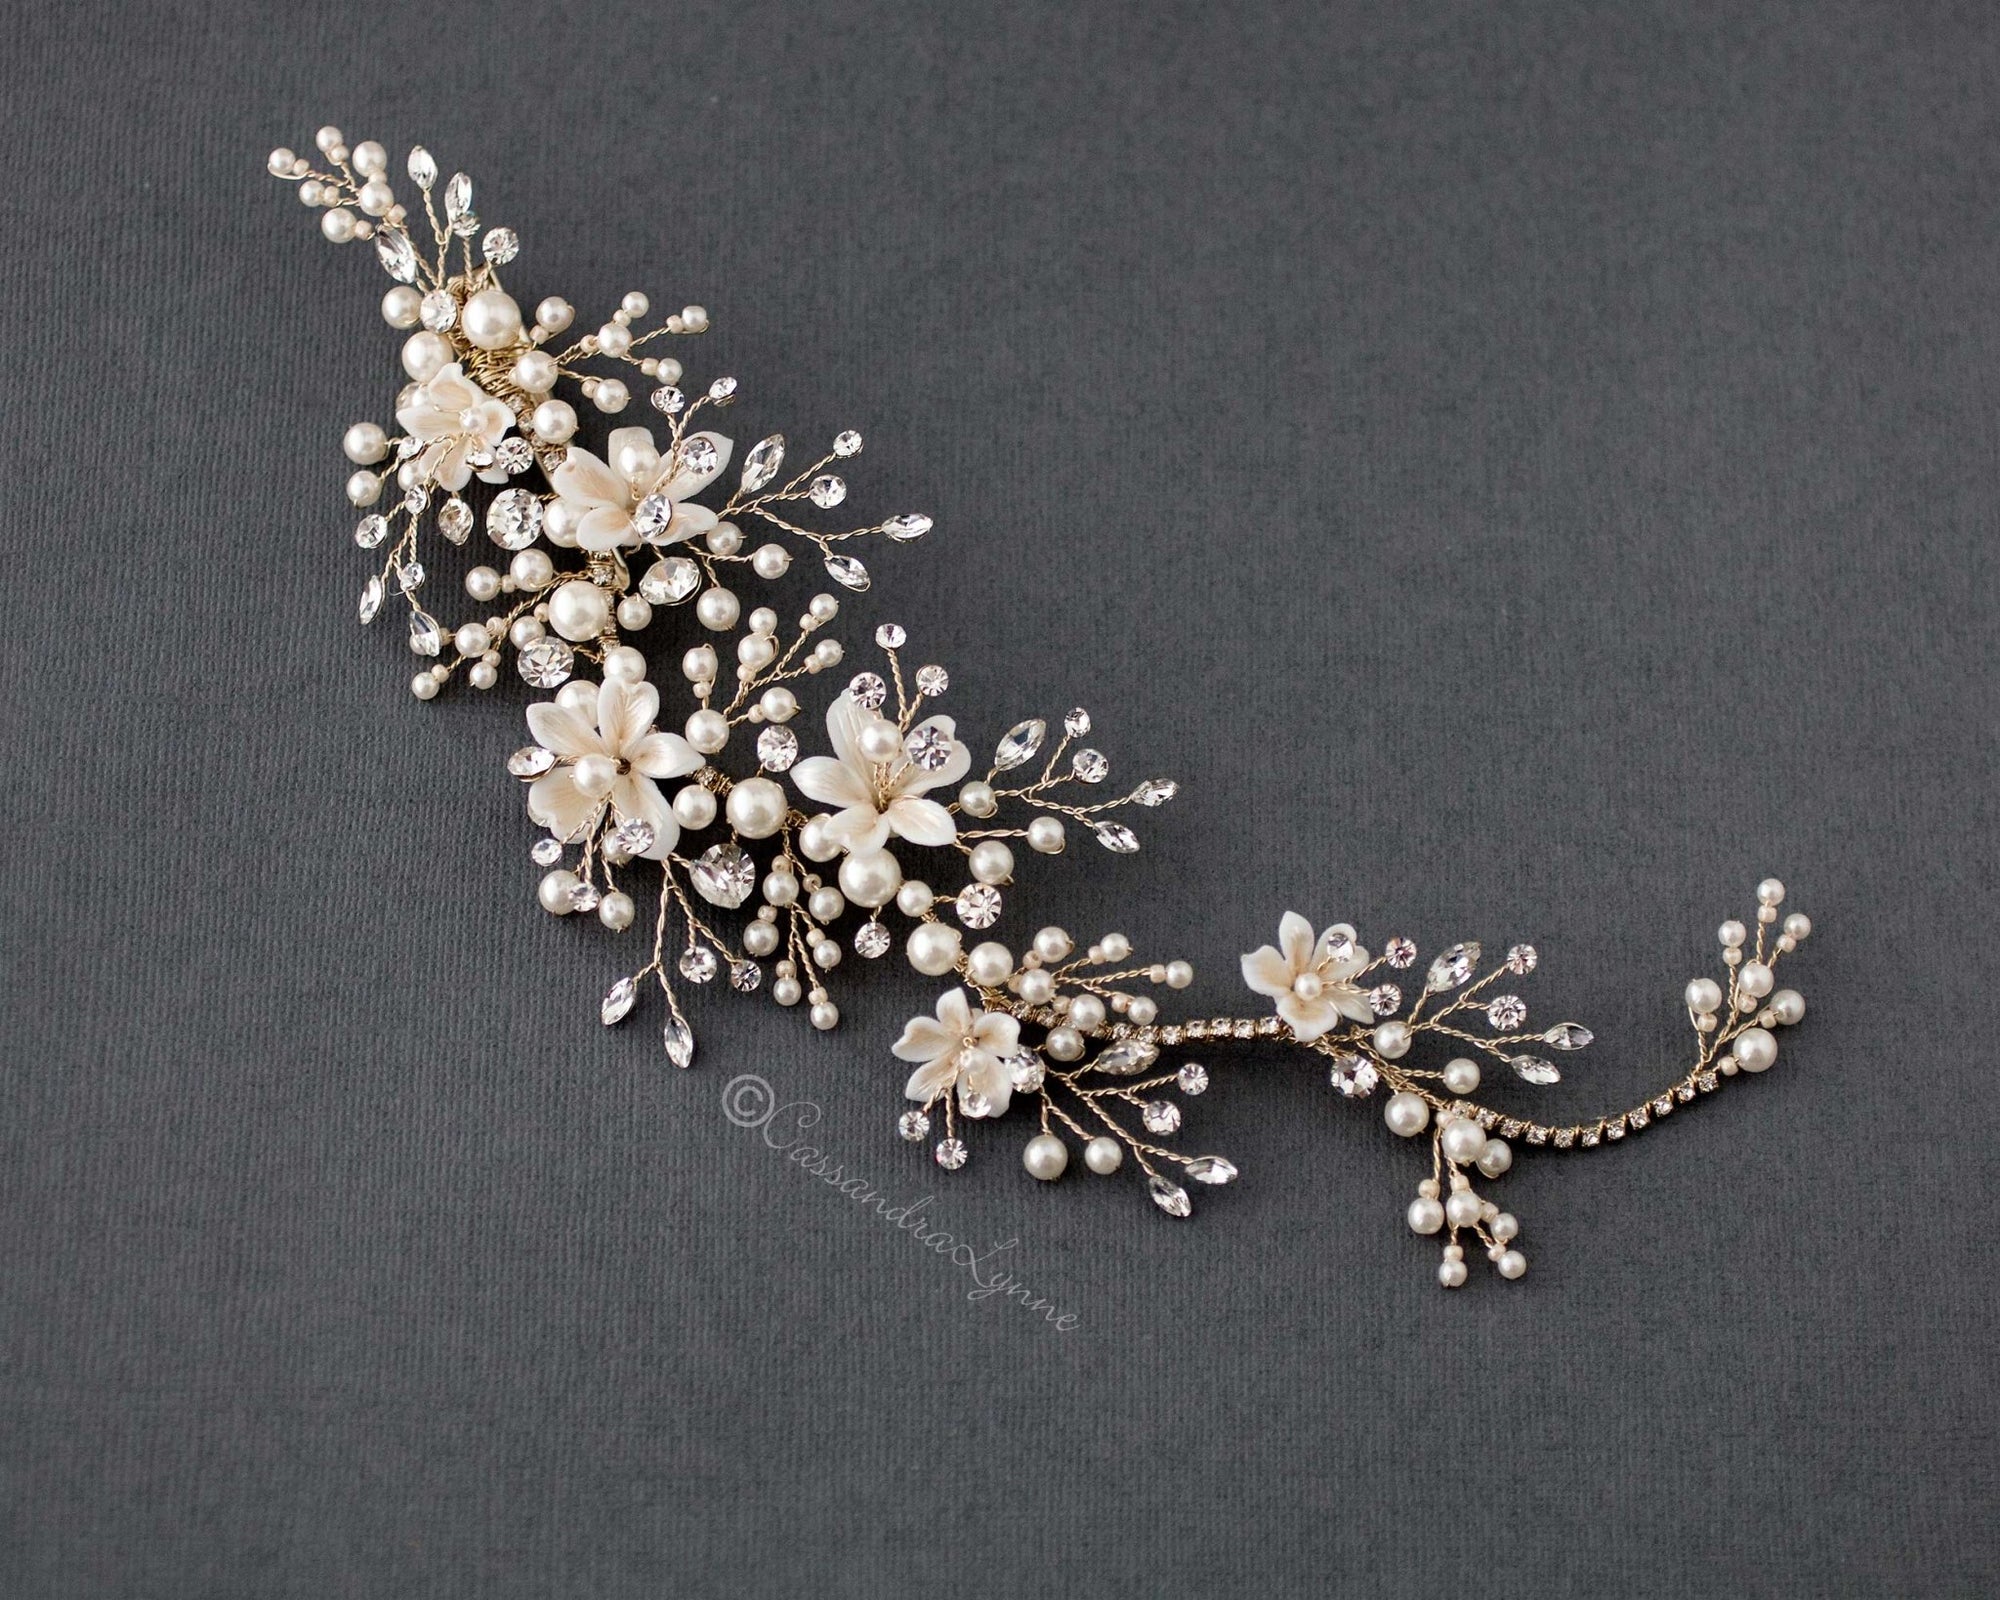 Pearl and Porcelain Flower Gold Bridal Headpiece - Cassandra Lynne